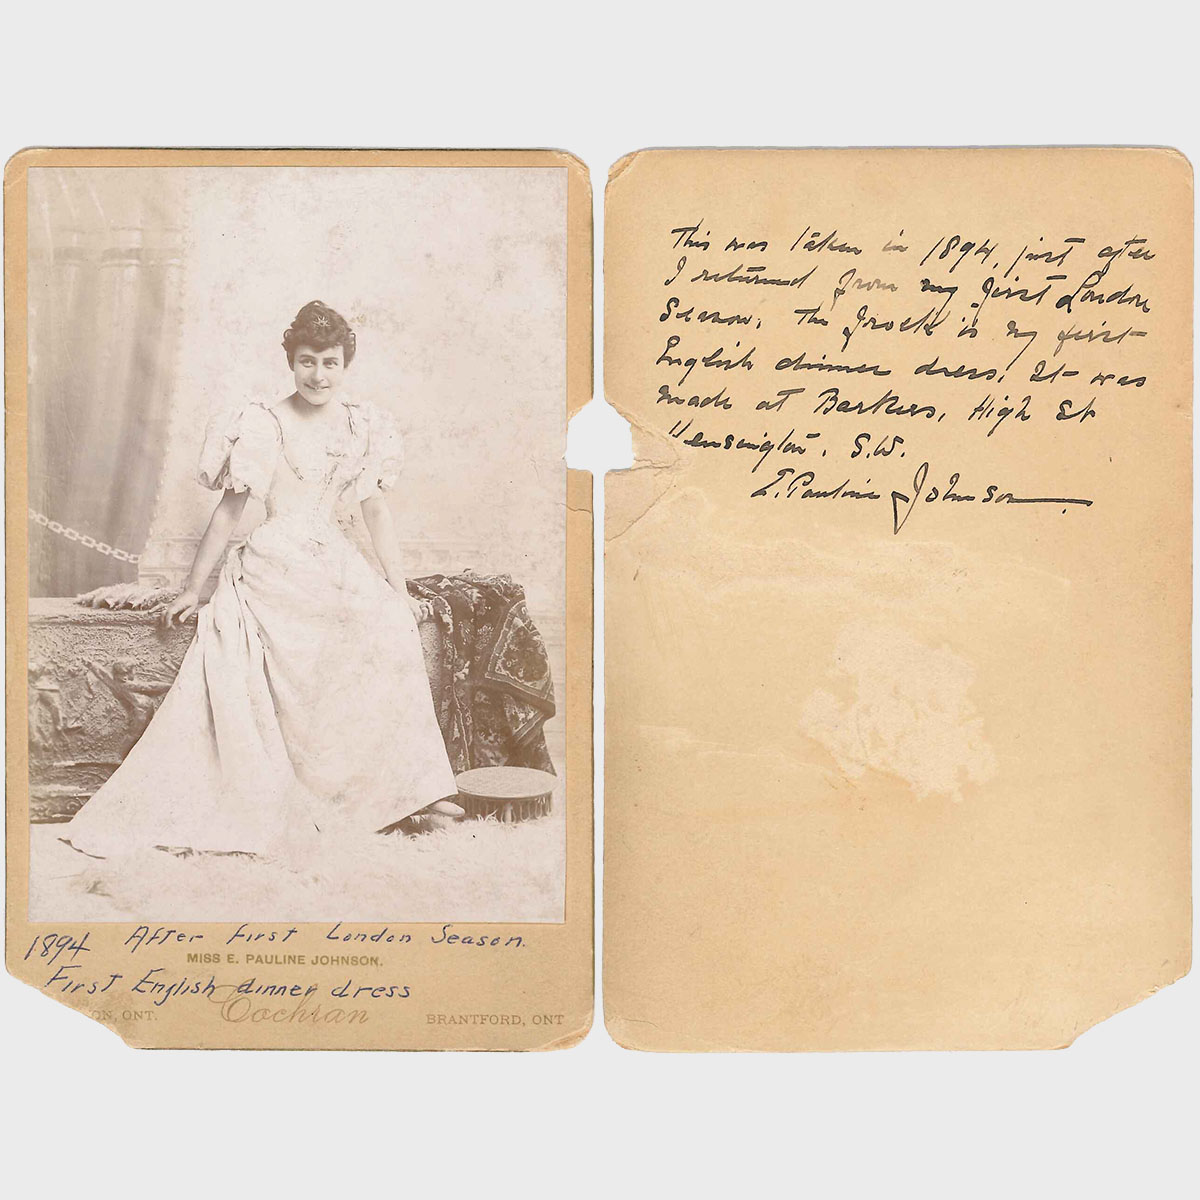 E. Pauline Johnson (Tekahionwake) Signed Portrait Cabinet Card, Cochran Studio, Brantford, 1894